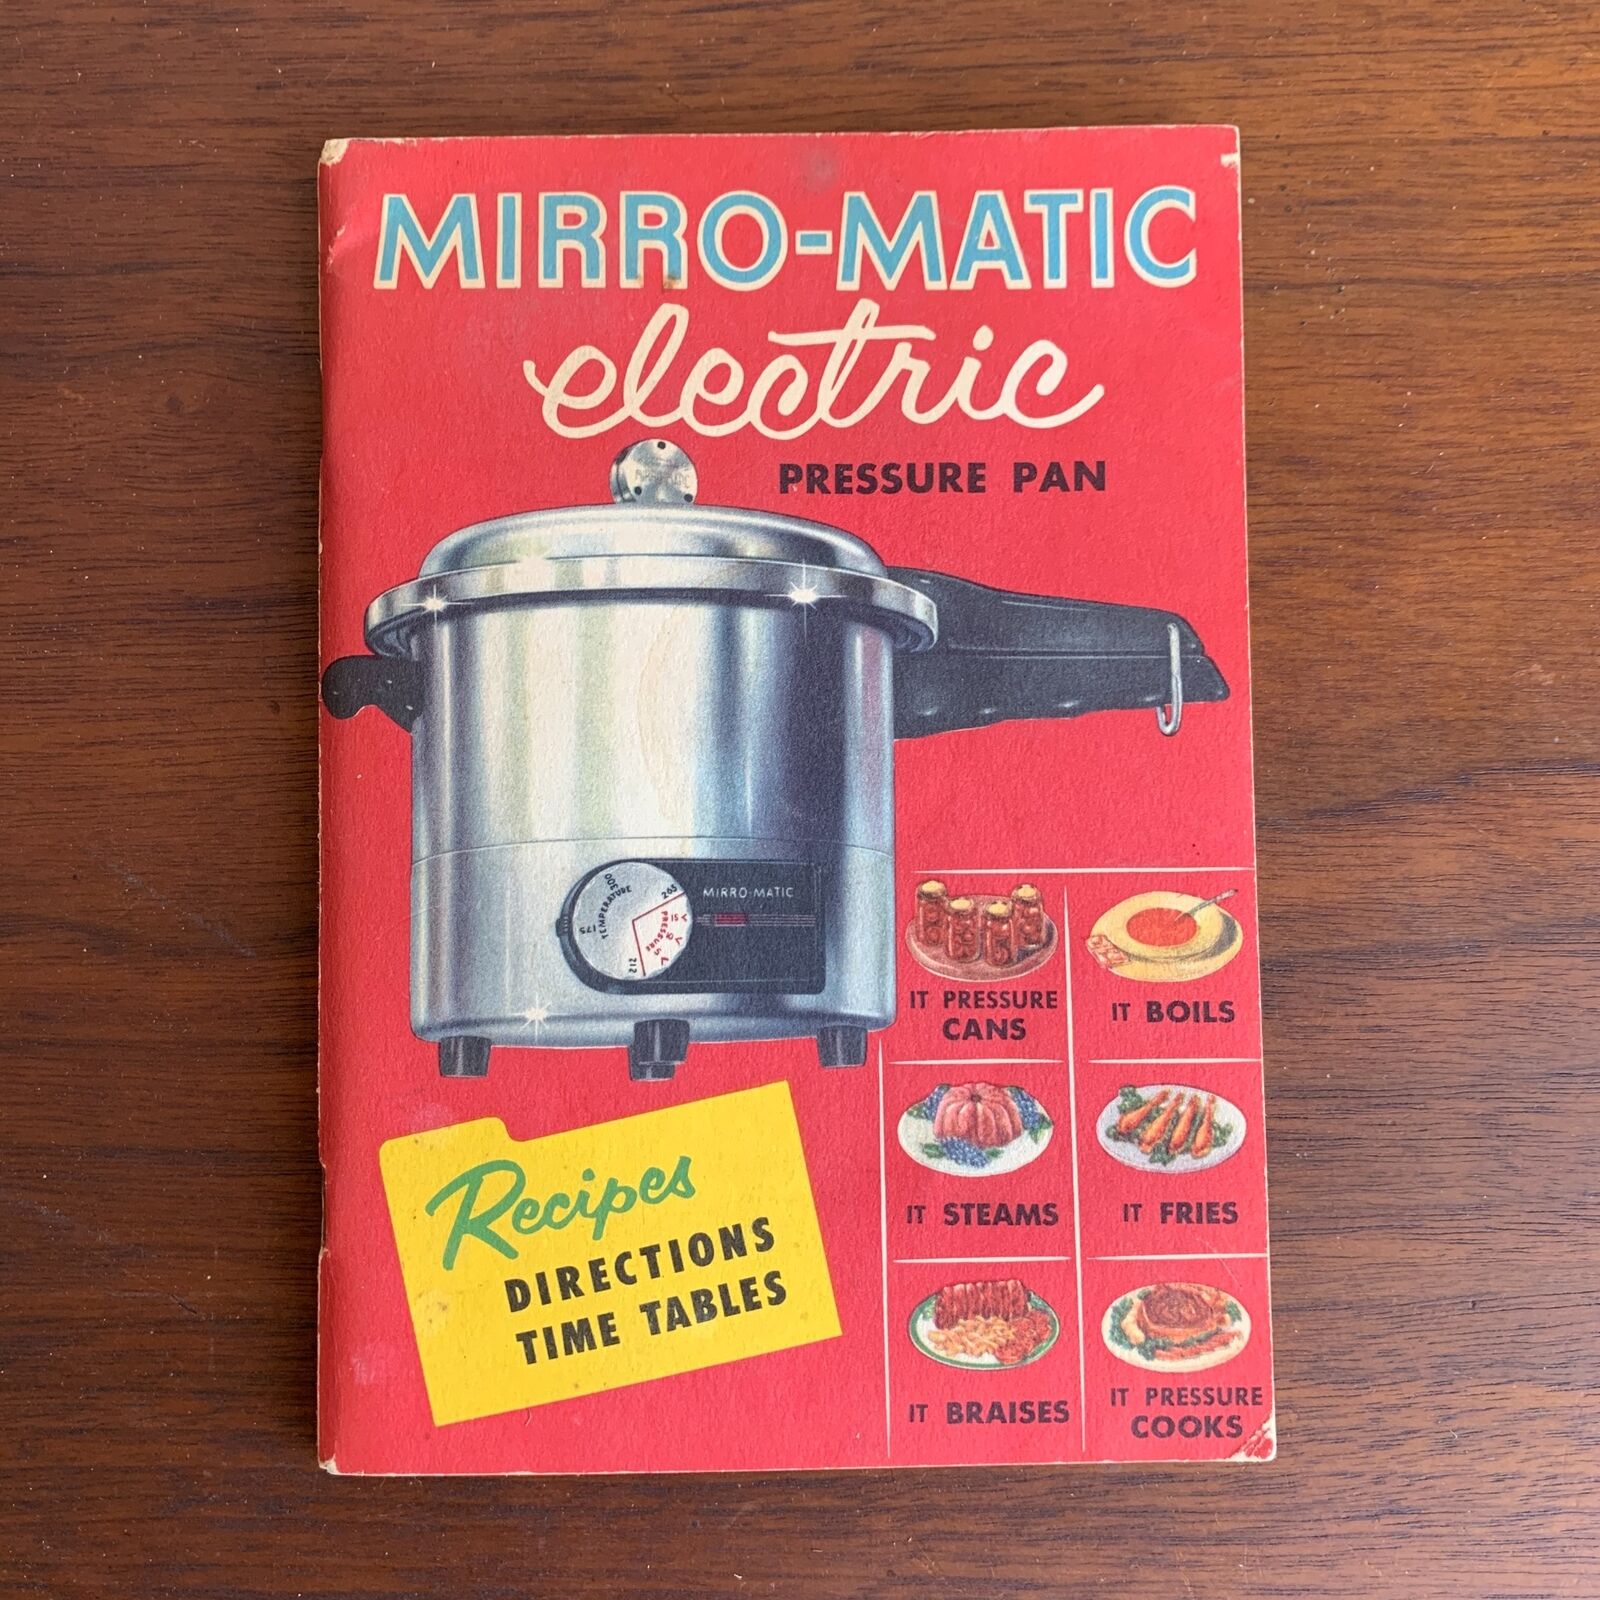 VTG 1955 Mirro-Matic Electric Pressure Pan Recipes / Cookbook - Pressure Cooker